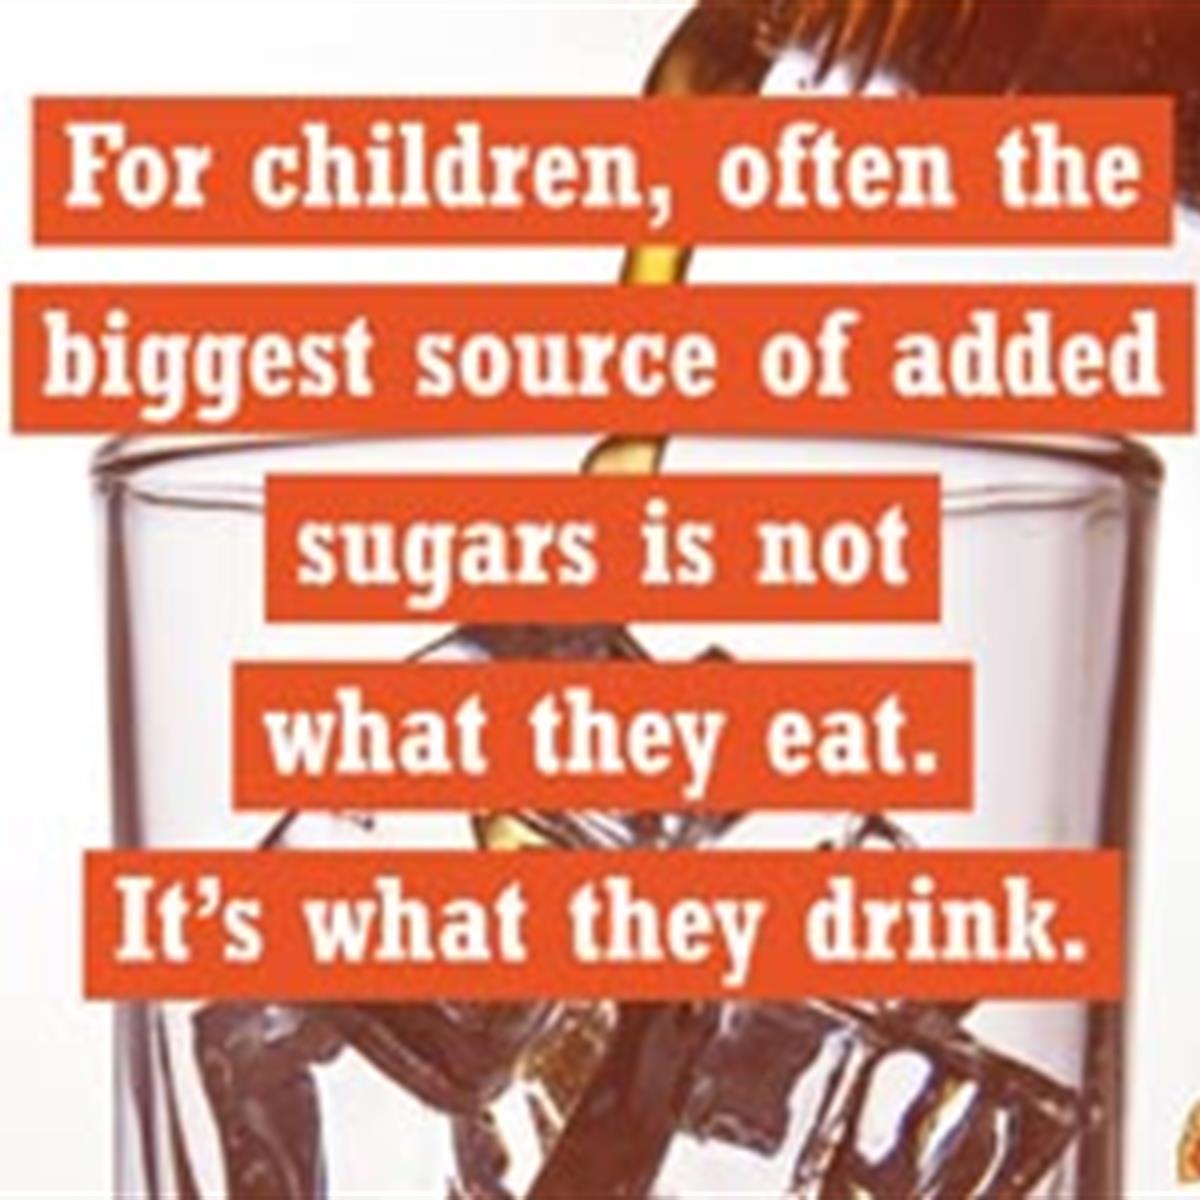 https://www.healthychildren.org/SiteCollectionImagesArticleImages/added_sugar_Article_image.jpg?RenditionID=6